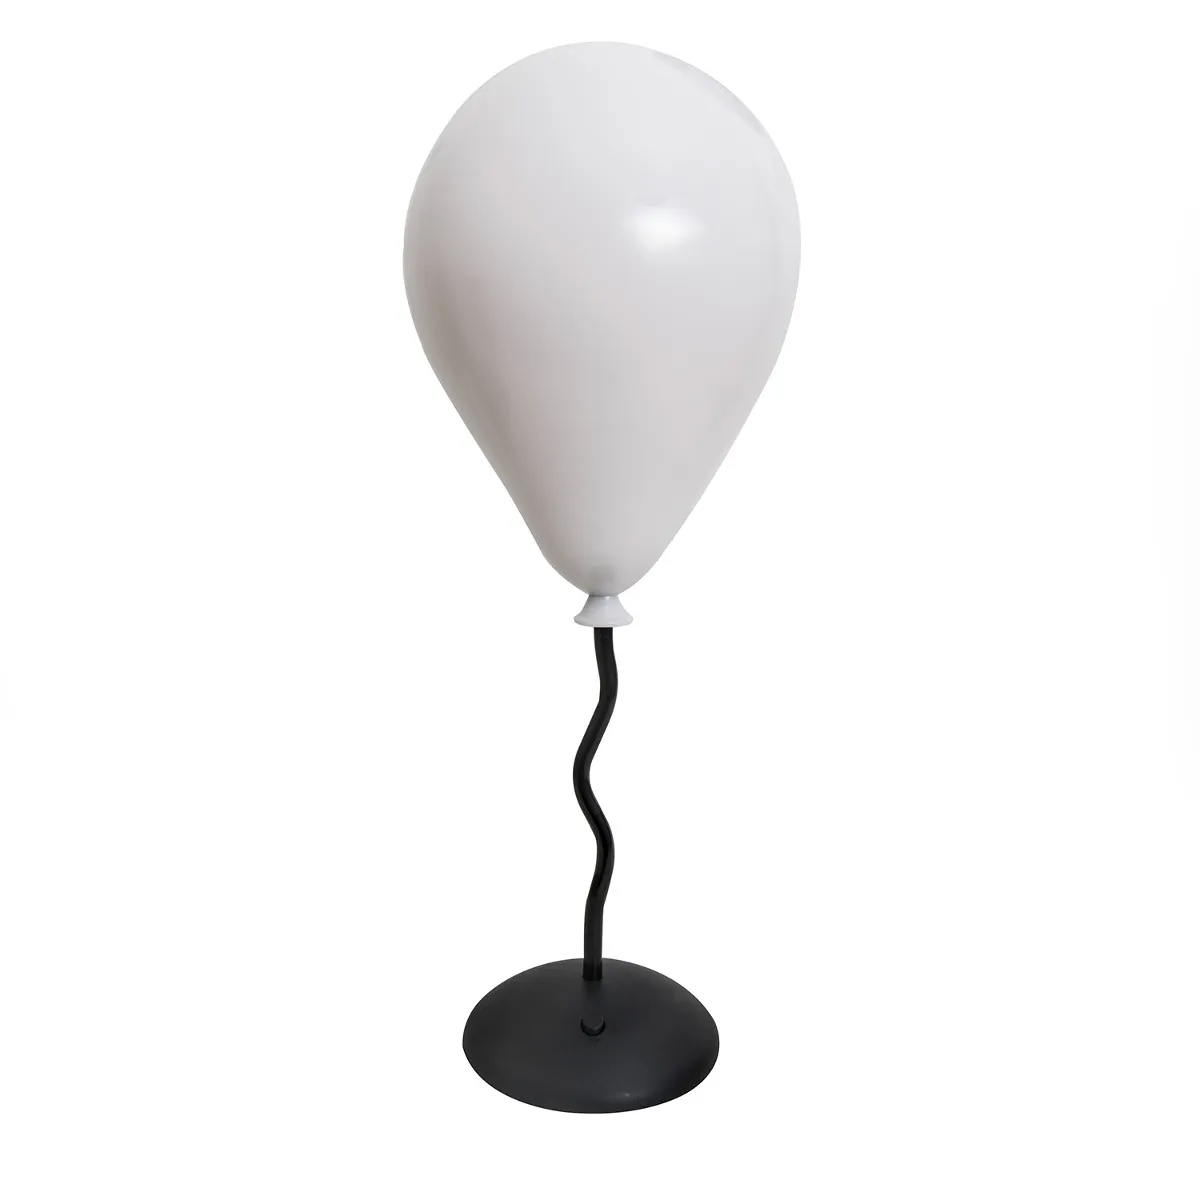 LED Stimmungslampe Luftballon zum Entspannen